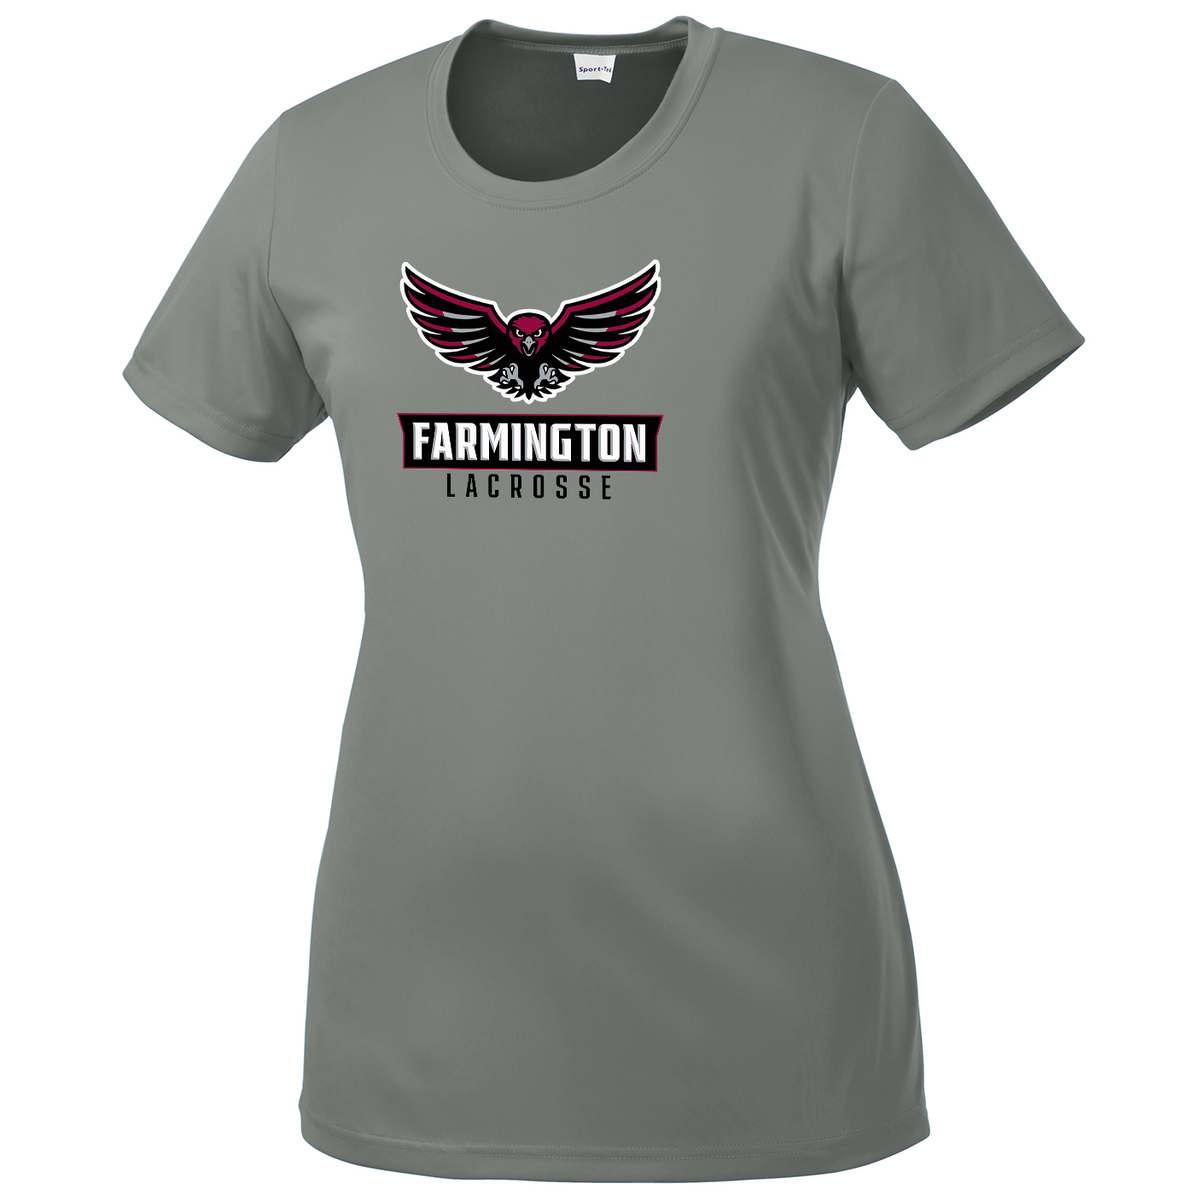 Farmington Lacrosse Women's Performance Tee